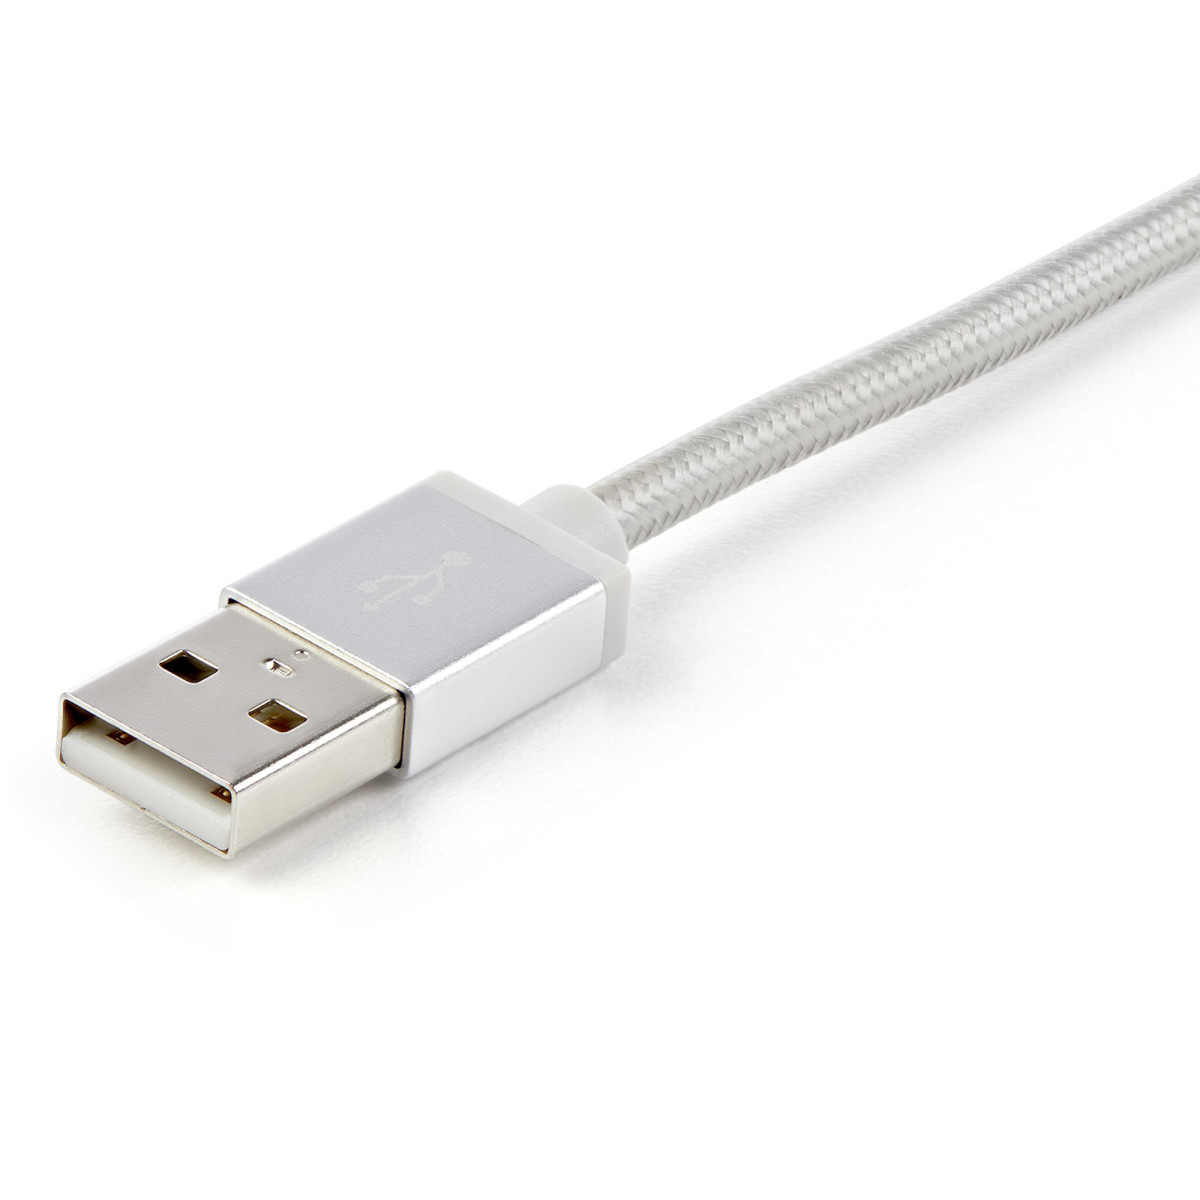 1m Lightning USB-C Micro-B to USB Cable